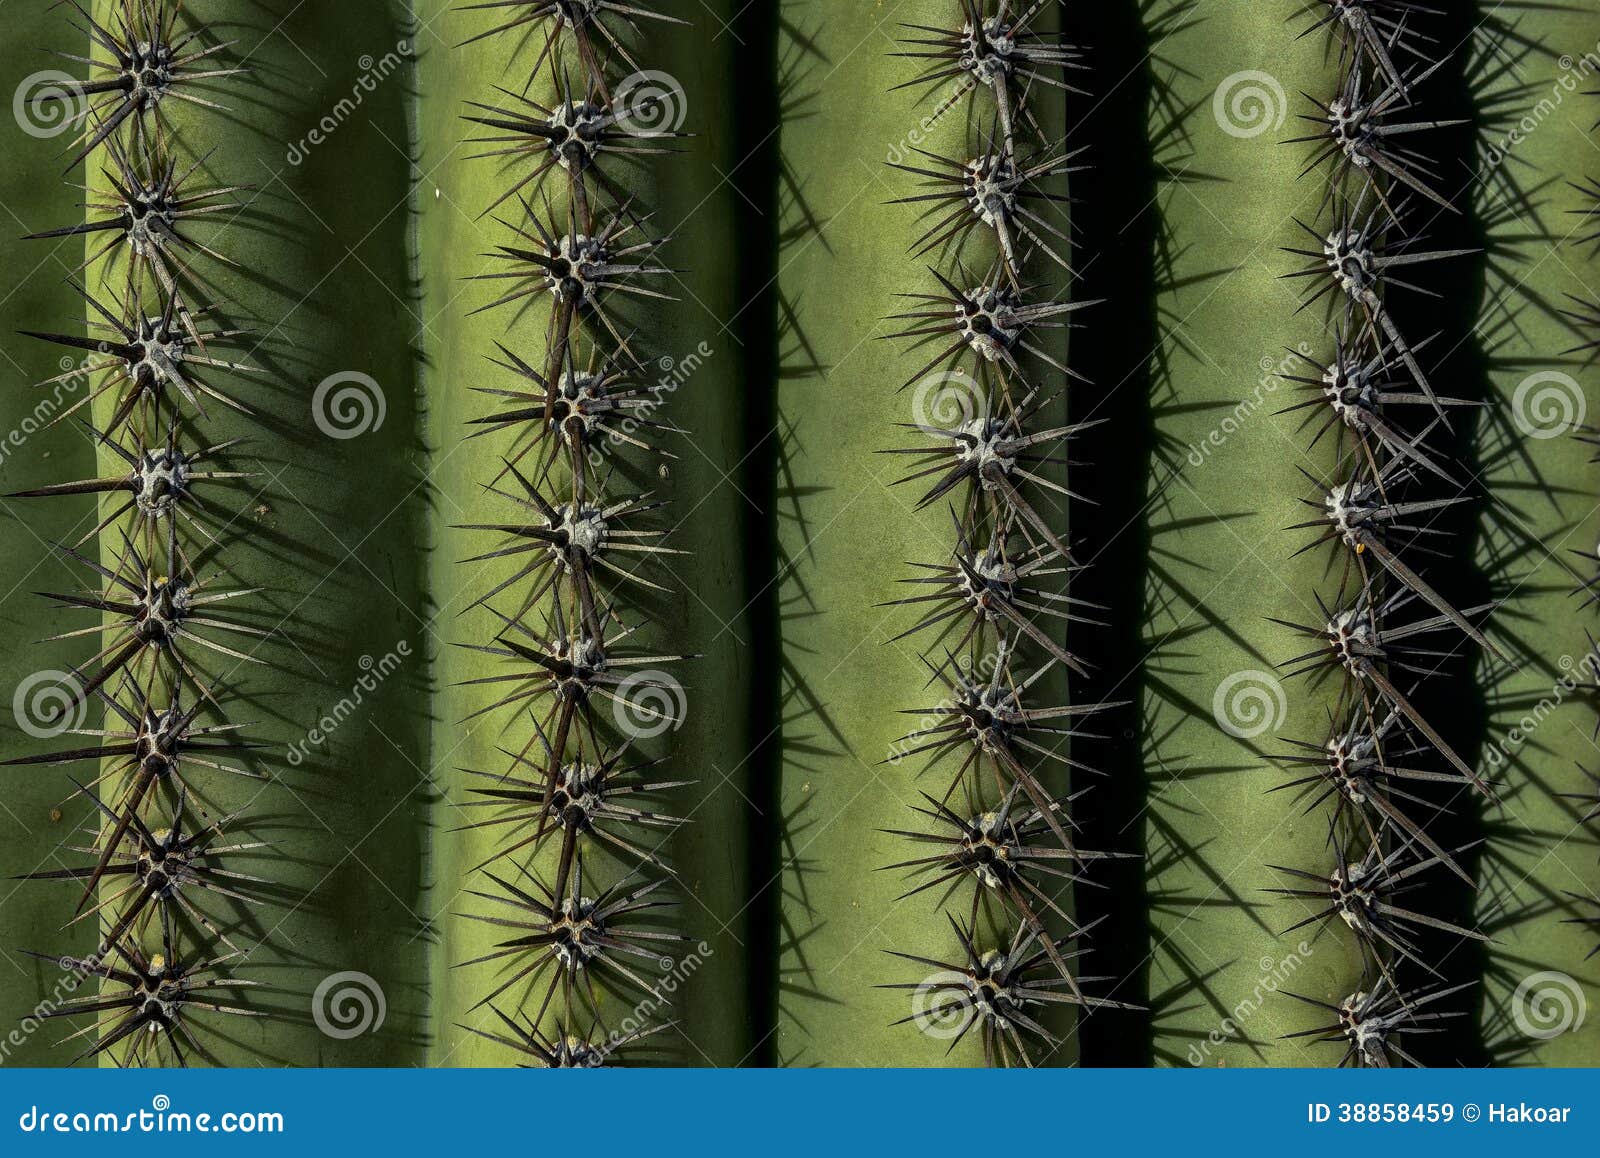 saguaro spines, saguaro national park